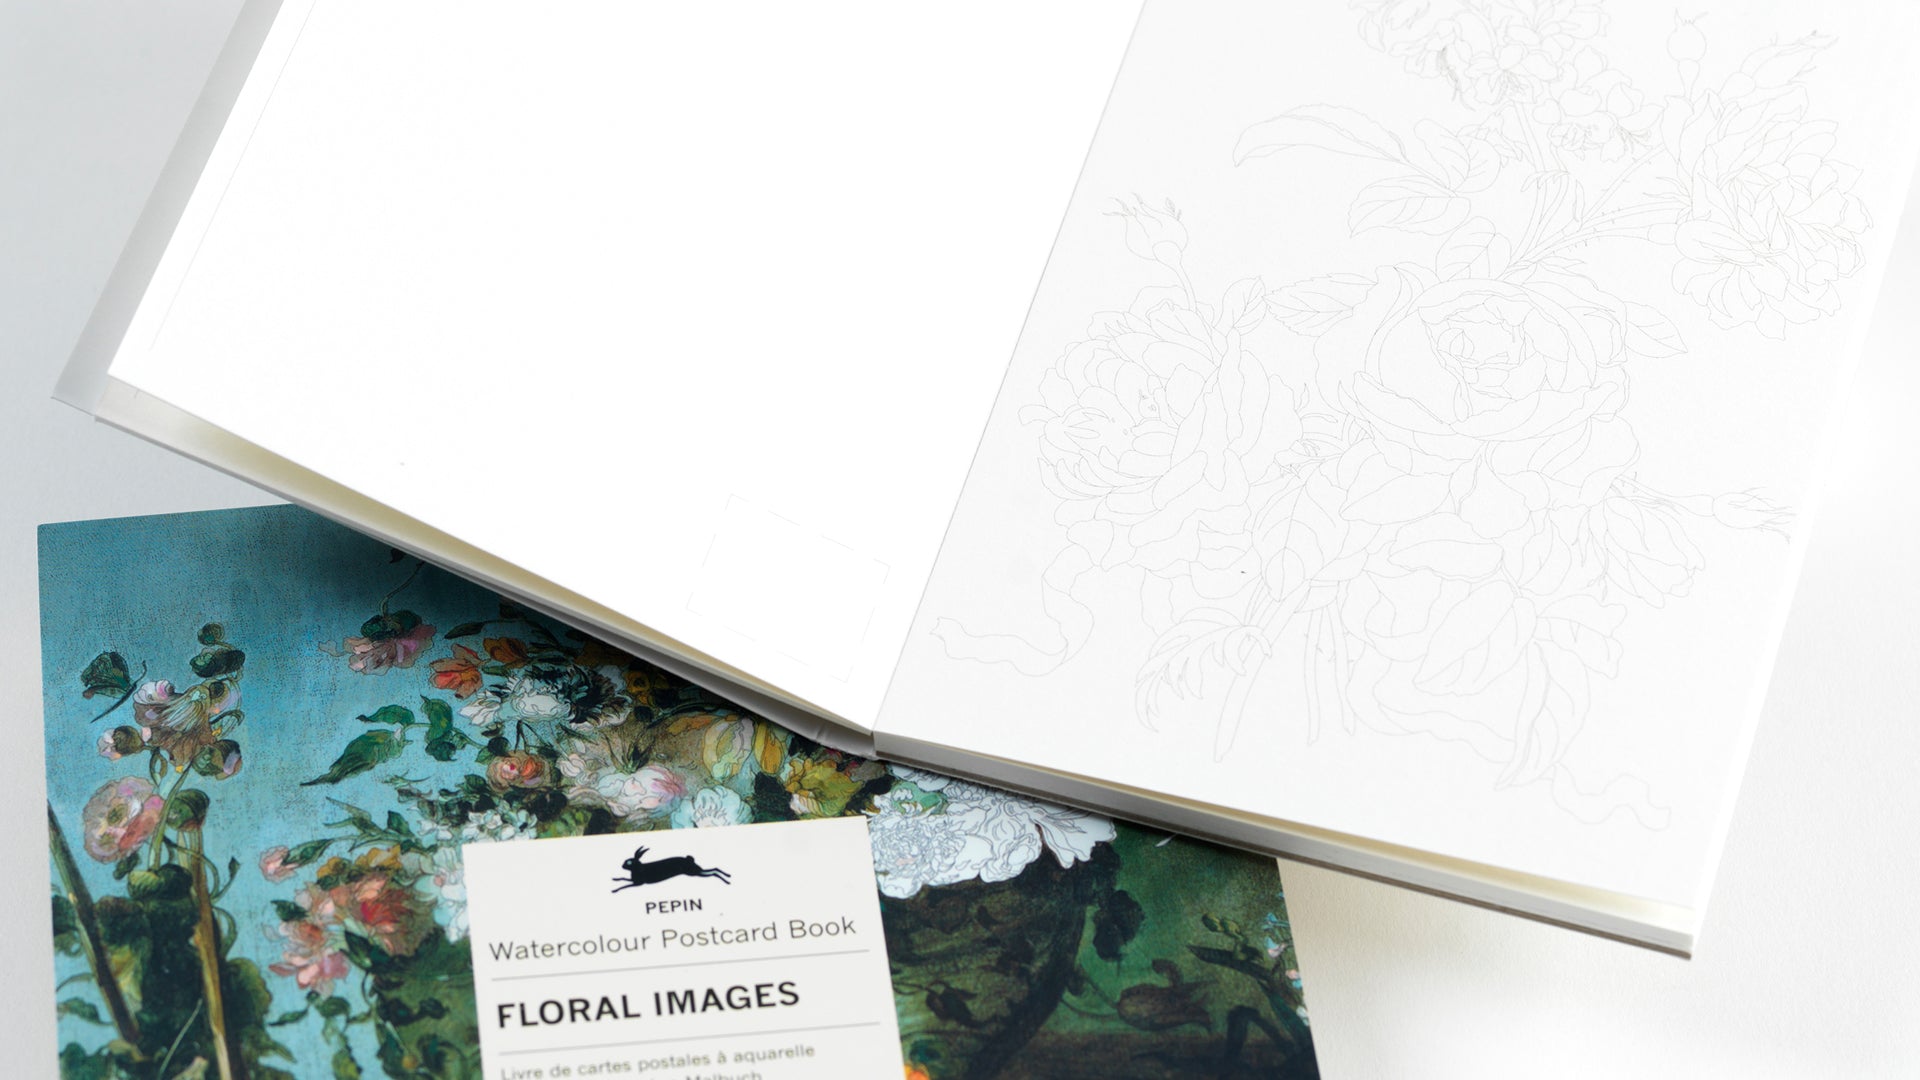 Watercolour Postcard Book - Floral